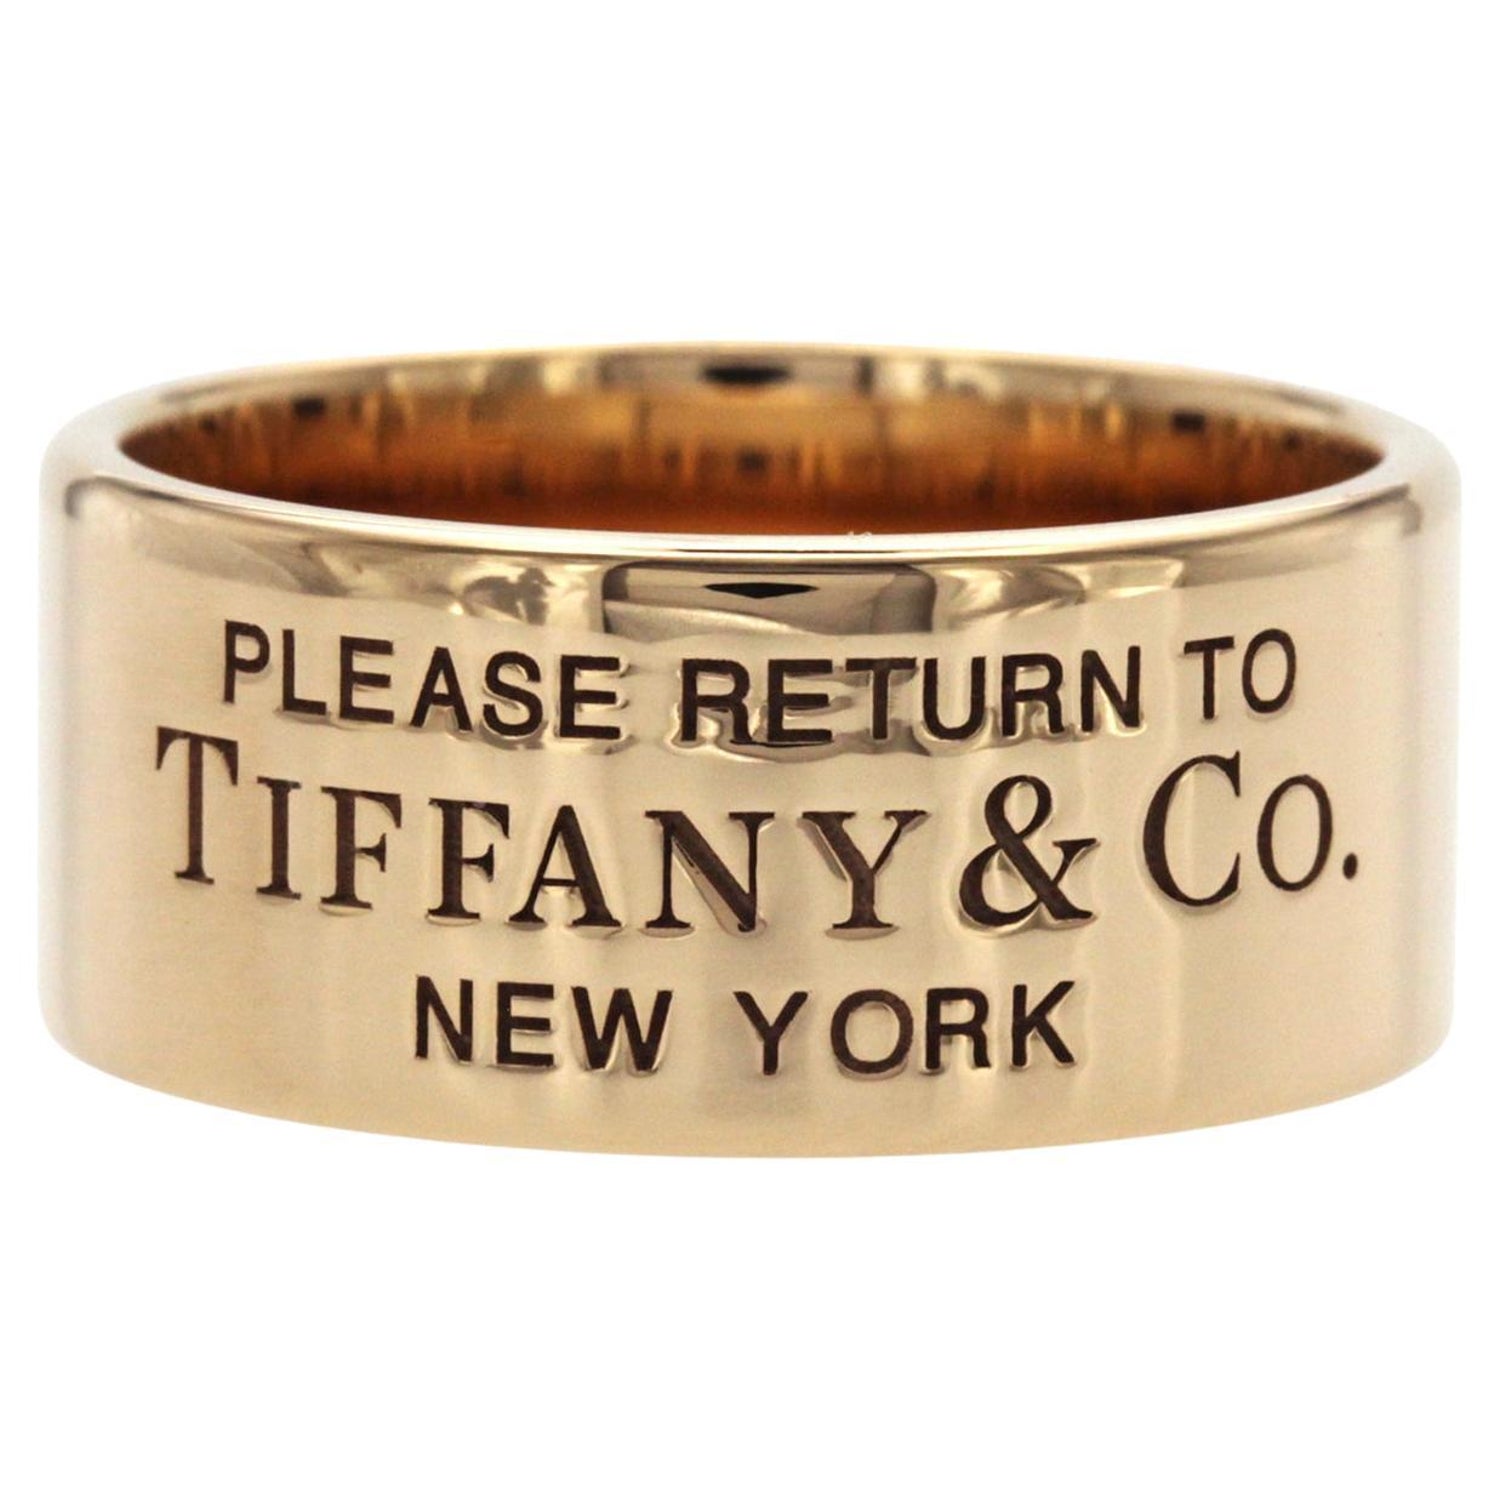 Tiffany & Co. Love bugs Butterfly Flower Ring 18K YG Sterling